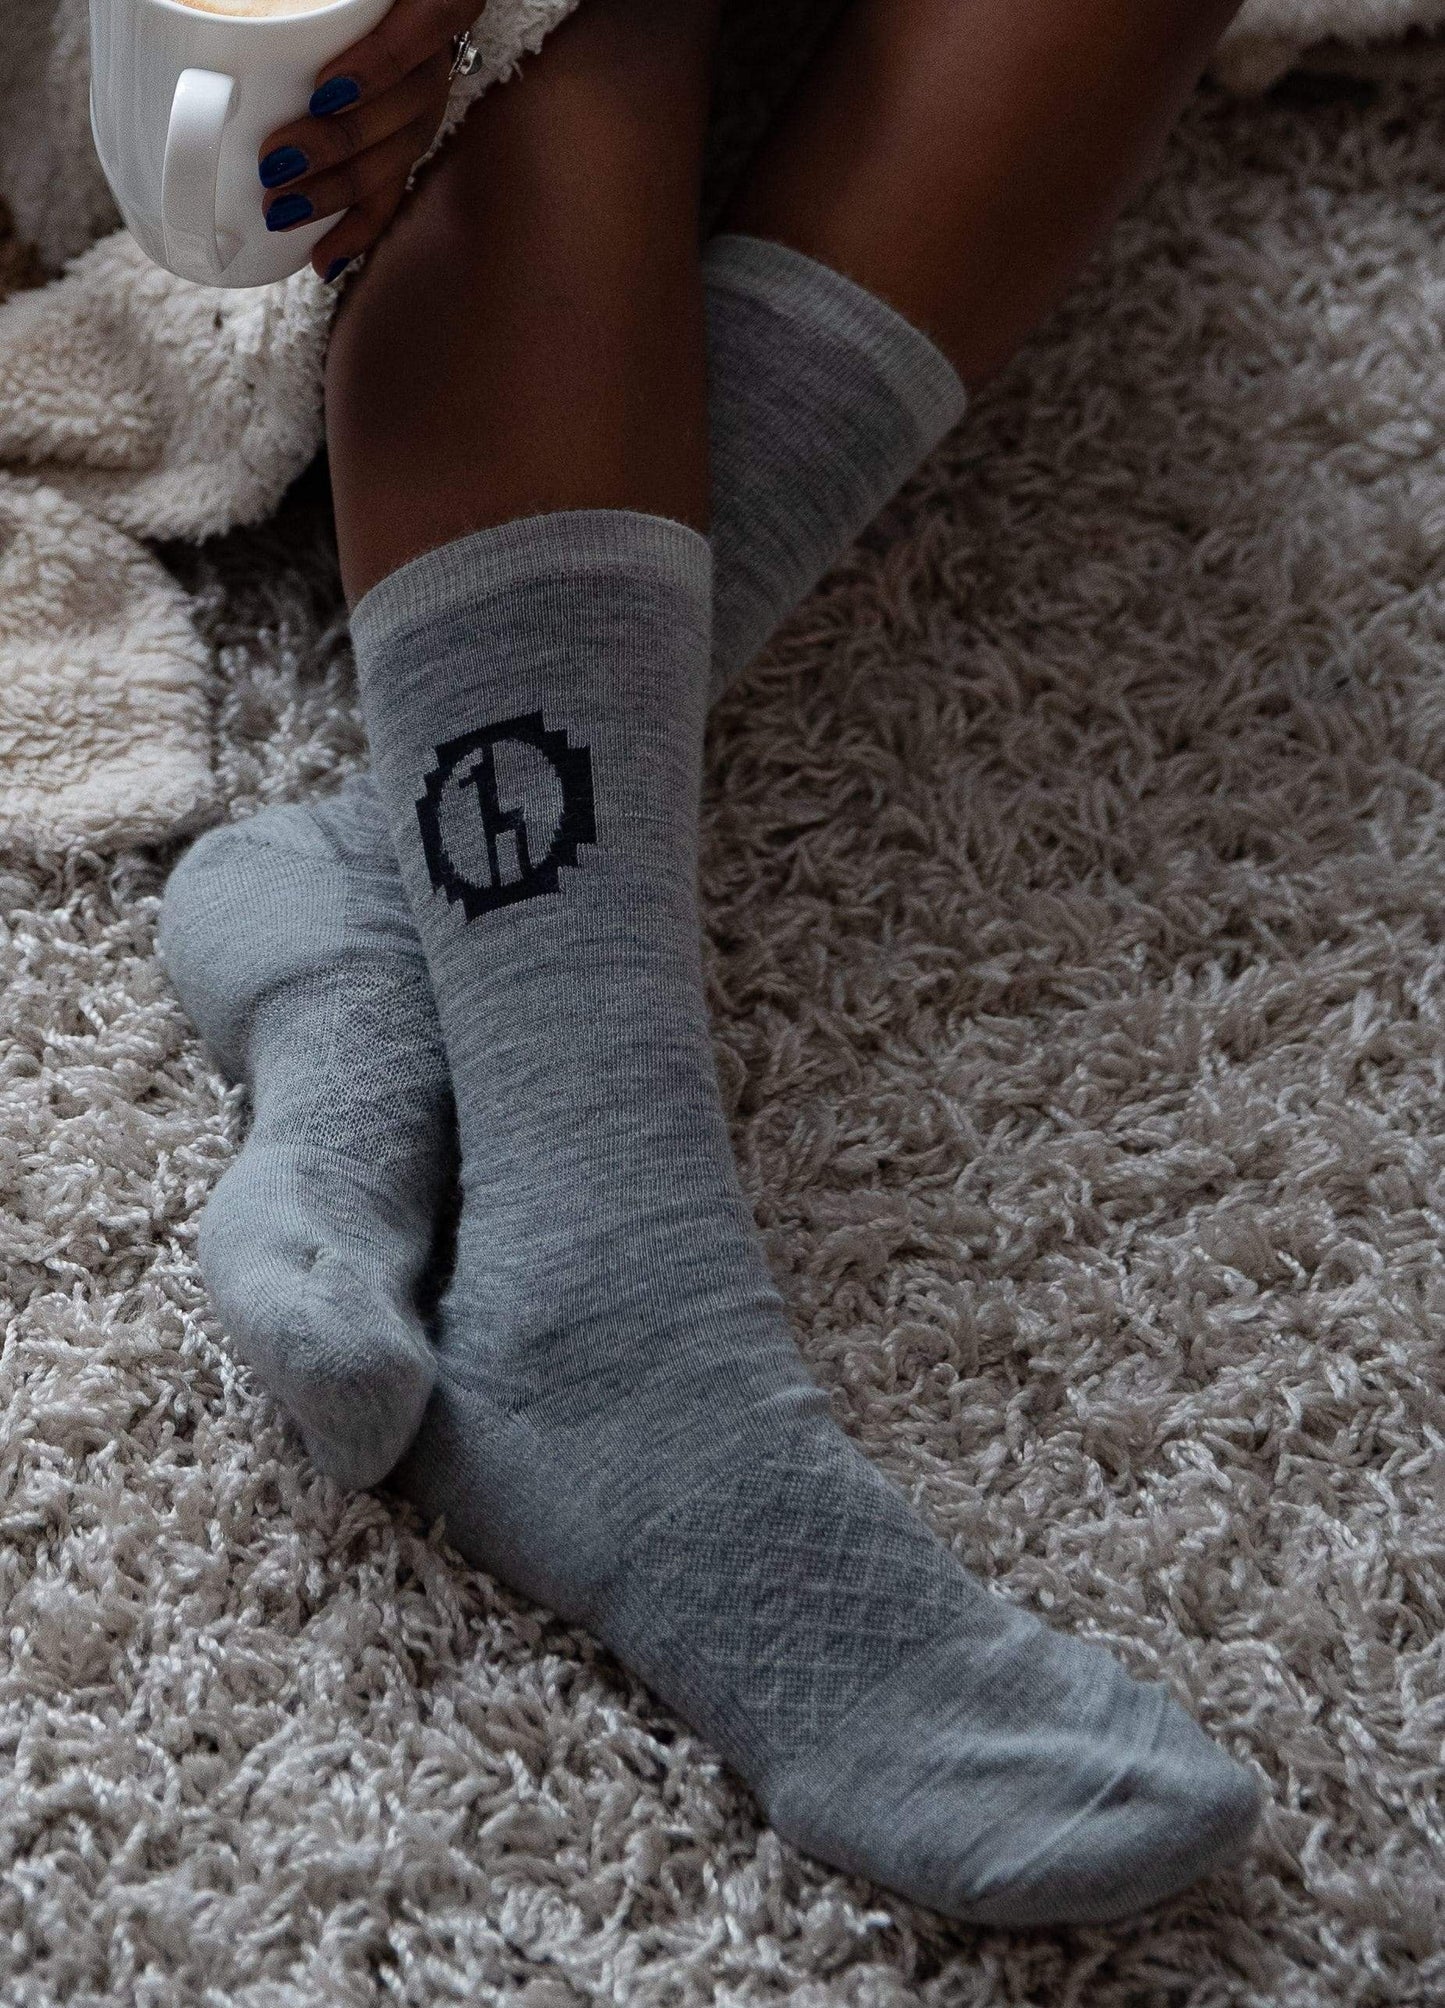 Baby alpaca socks on rug with model legs and coffee